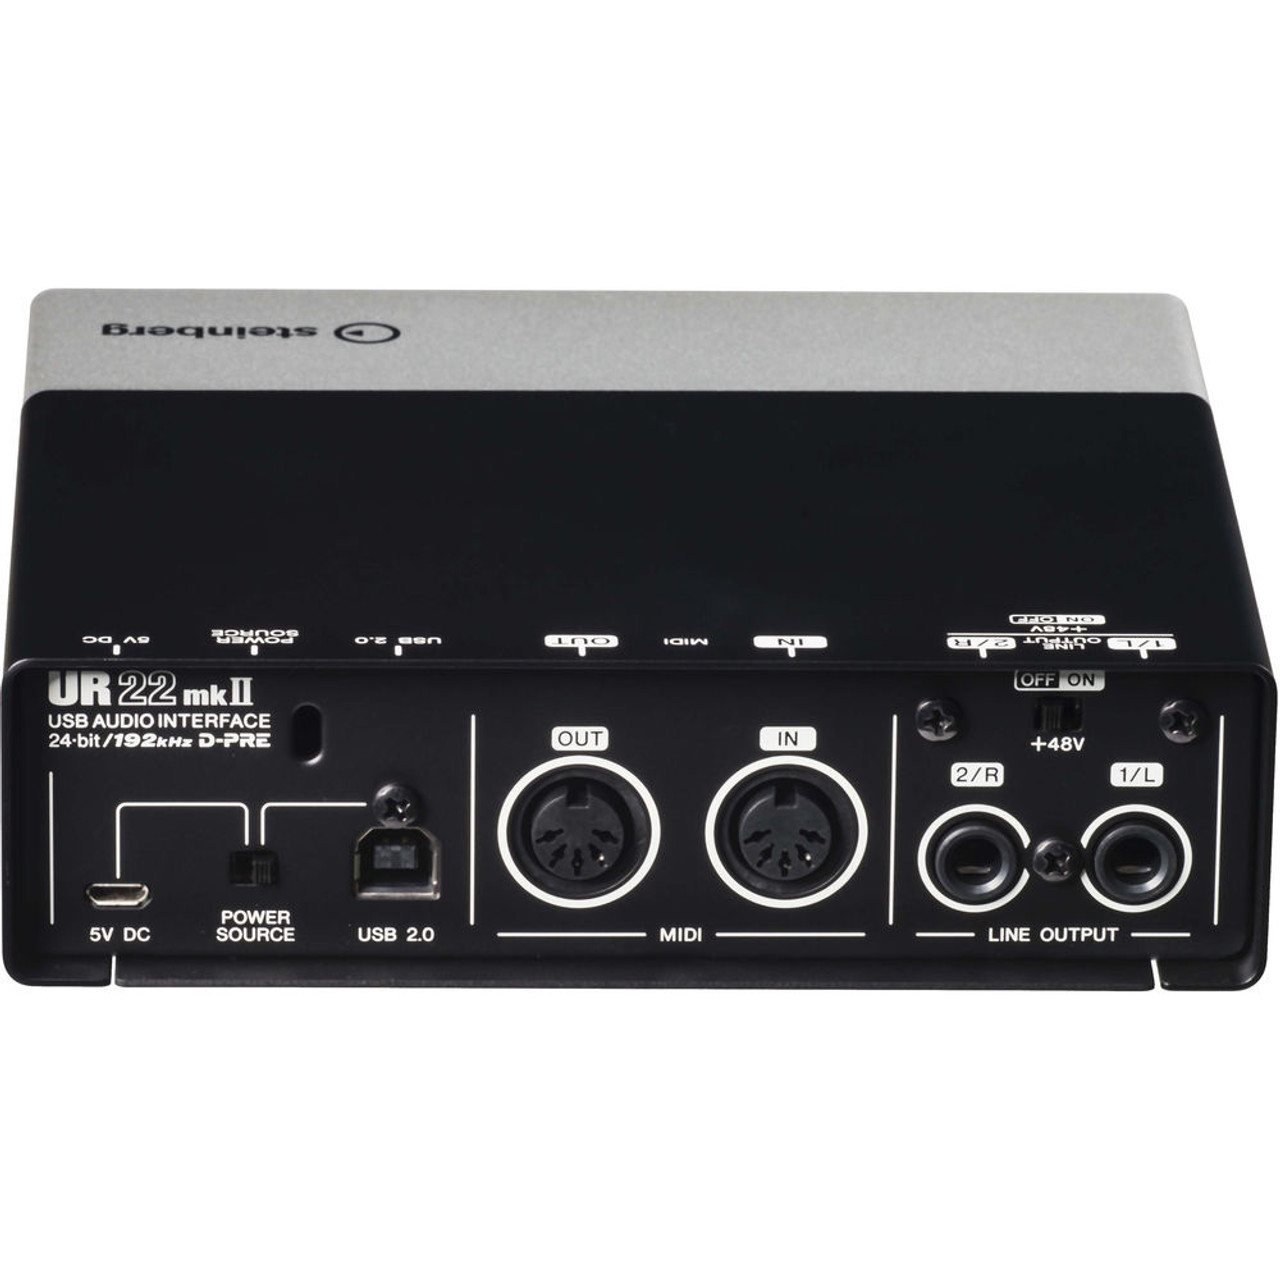 Steinberg UR22 MKII USB Audio Interface